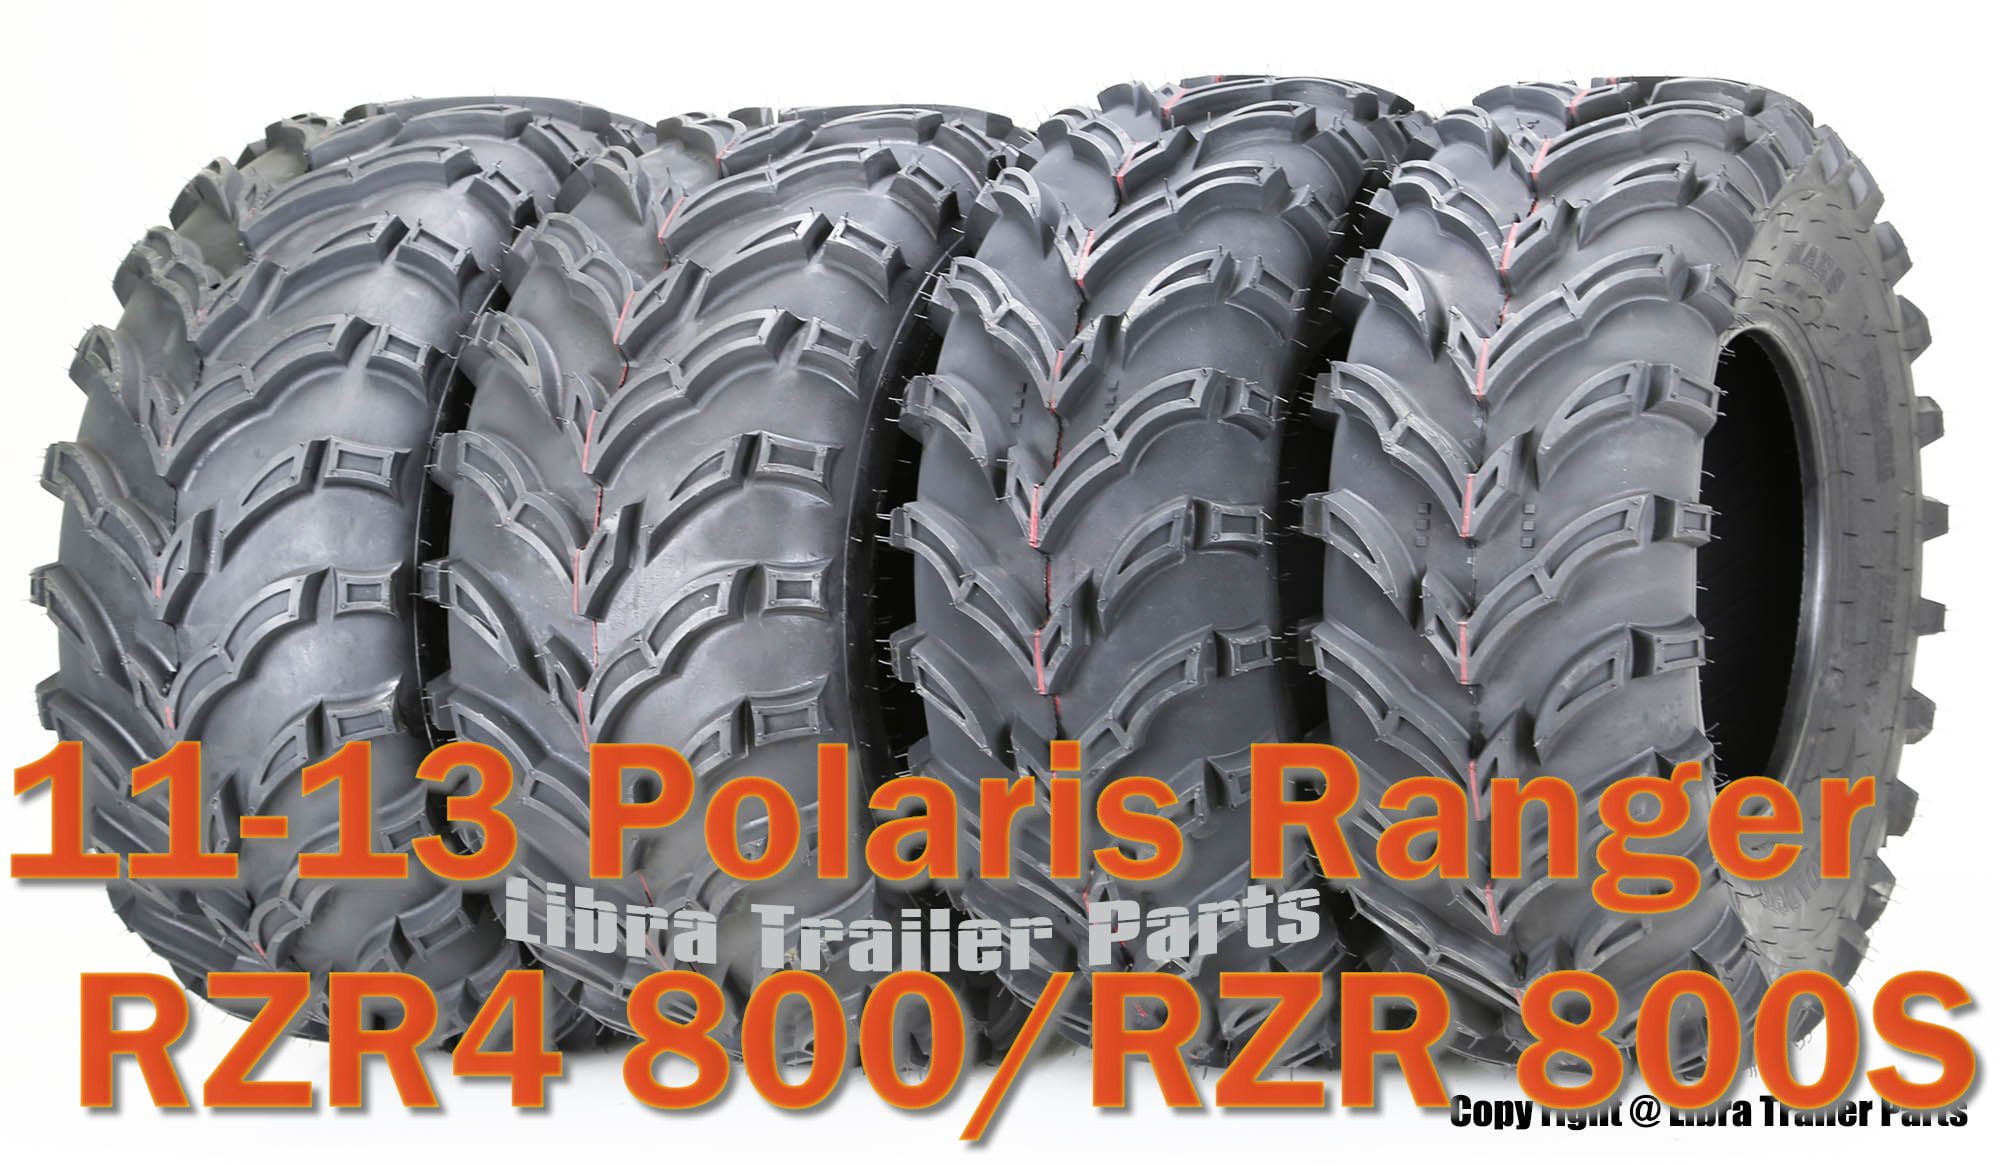 27x9-12 ATV Front Tire Set for 11-13 Polaris Ranger RZR4 800//RZR 800S 2